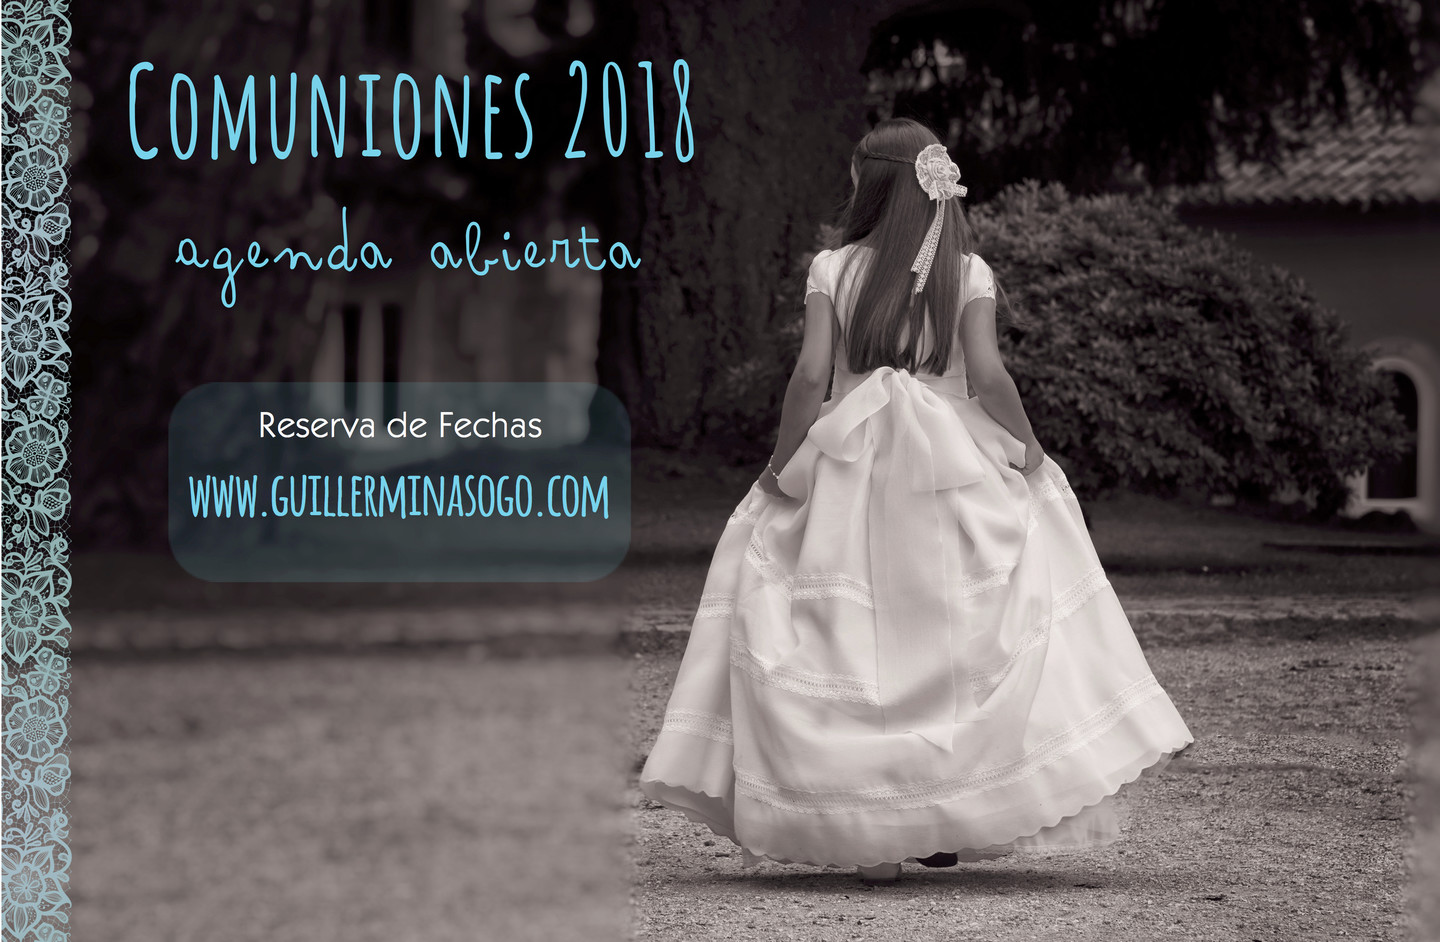 Guillermina Sogo Photo - promo%20comuniones%202018_1.jpg